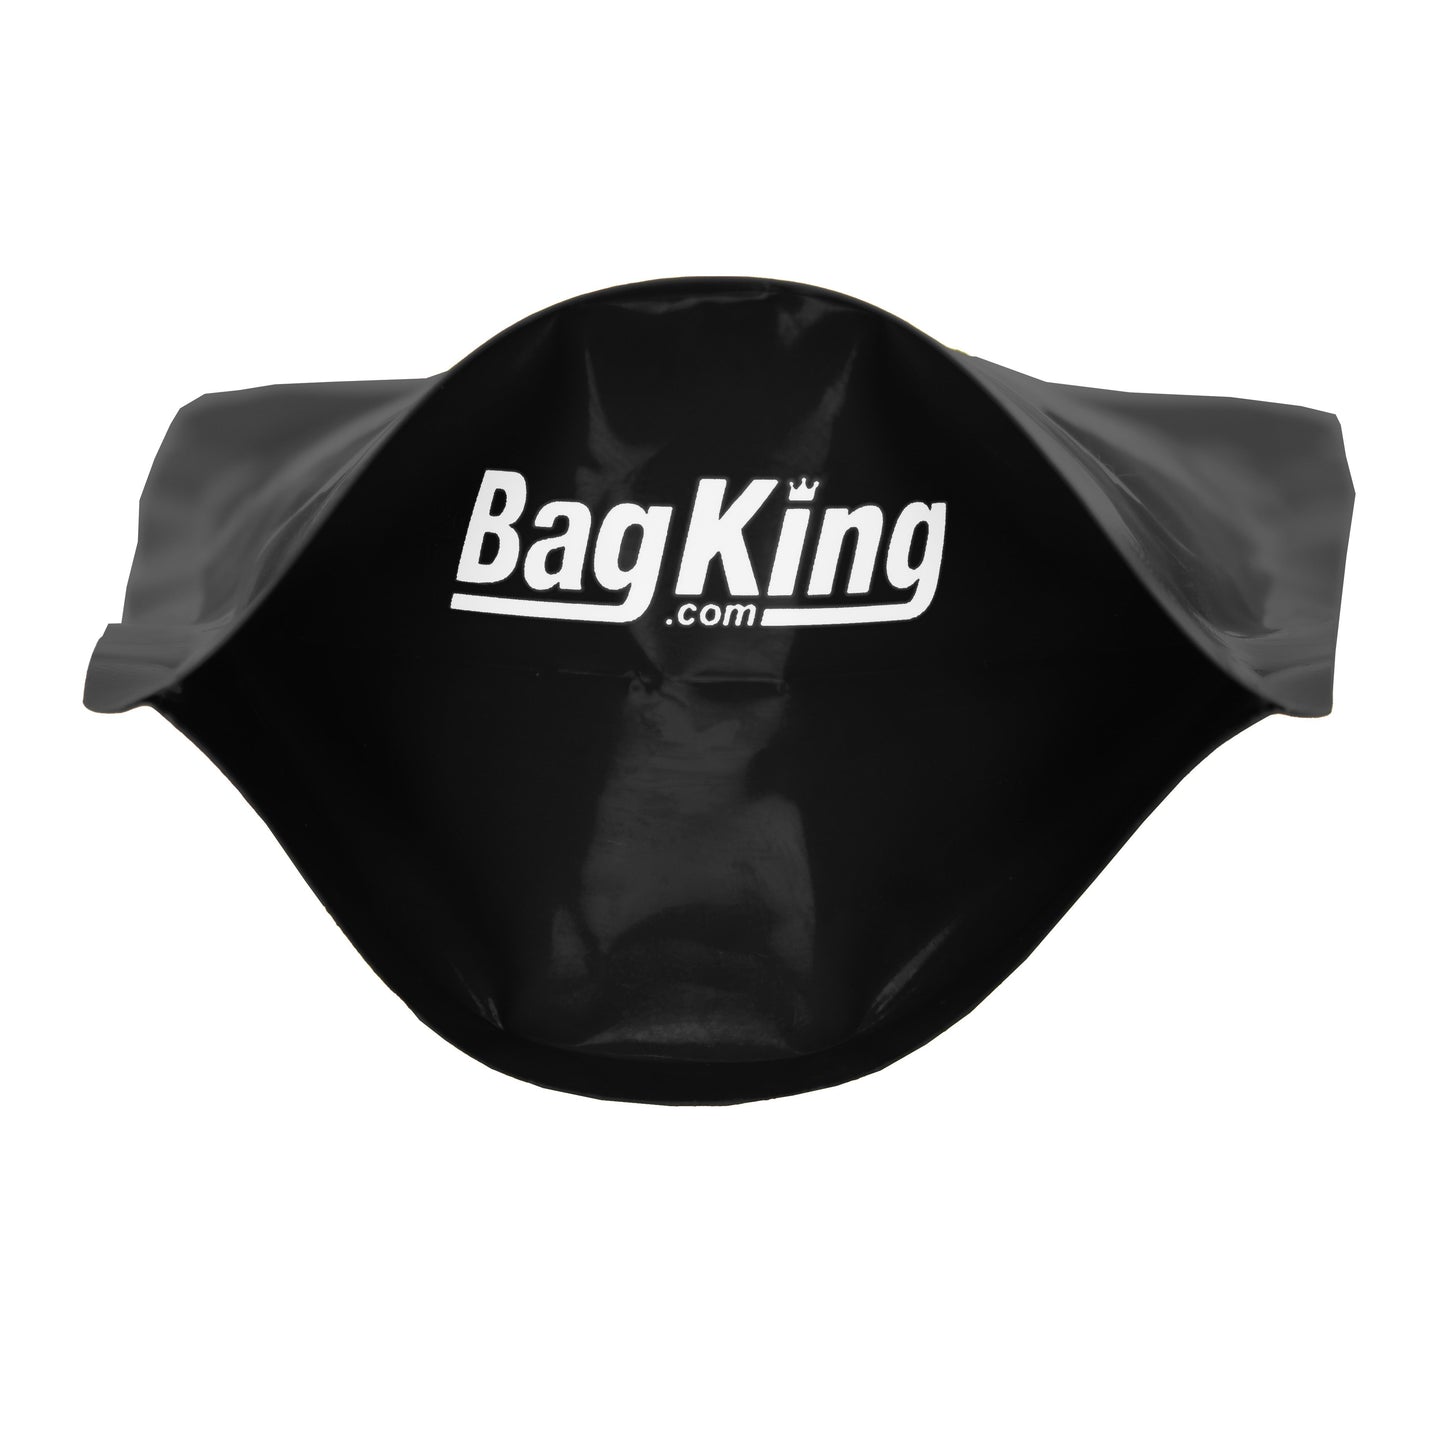 Bag King Clear Leaf Bag (1/8th to 1/4th oz)